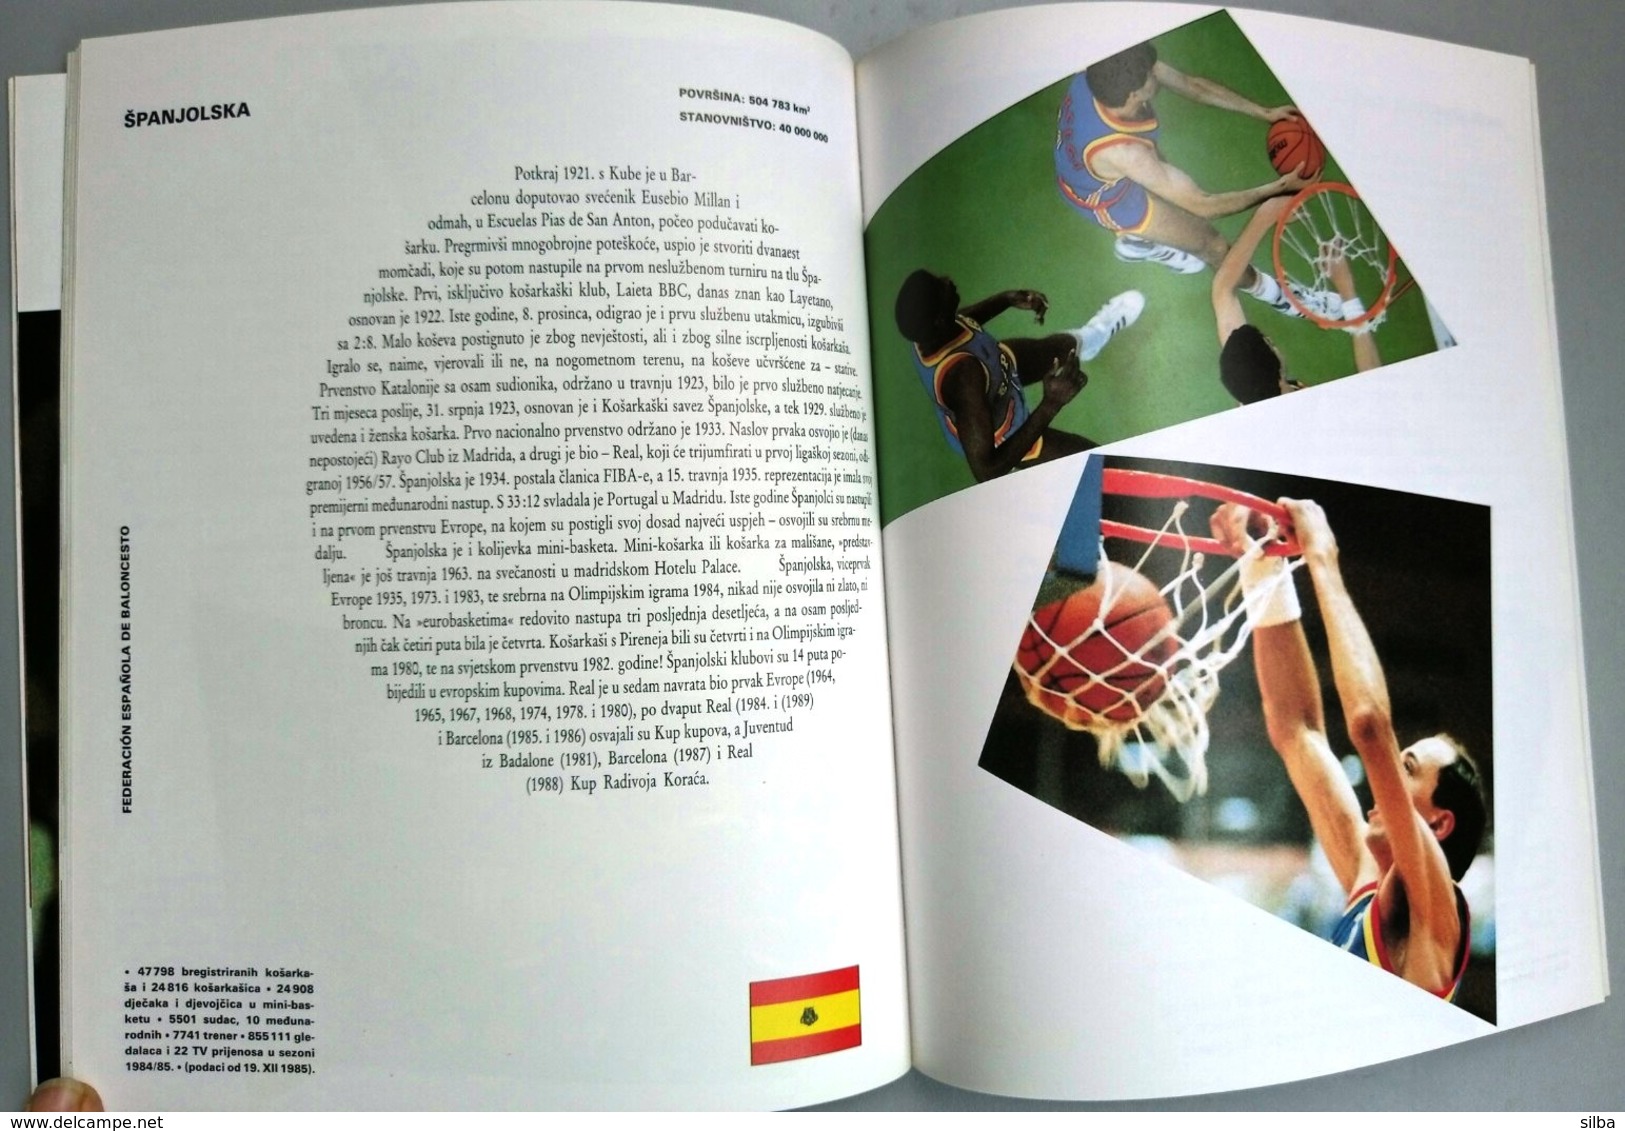 Croatia 1989 / EUROBASKET  ZAGREB '89 / 26th European Basketball Championship for Men / Book